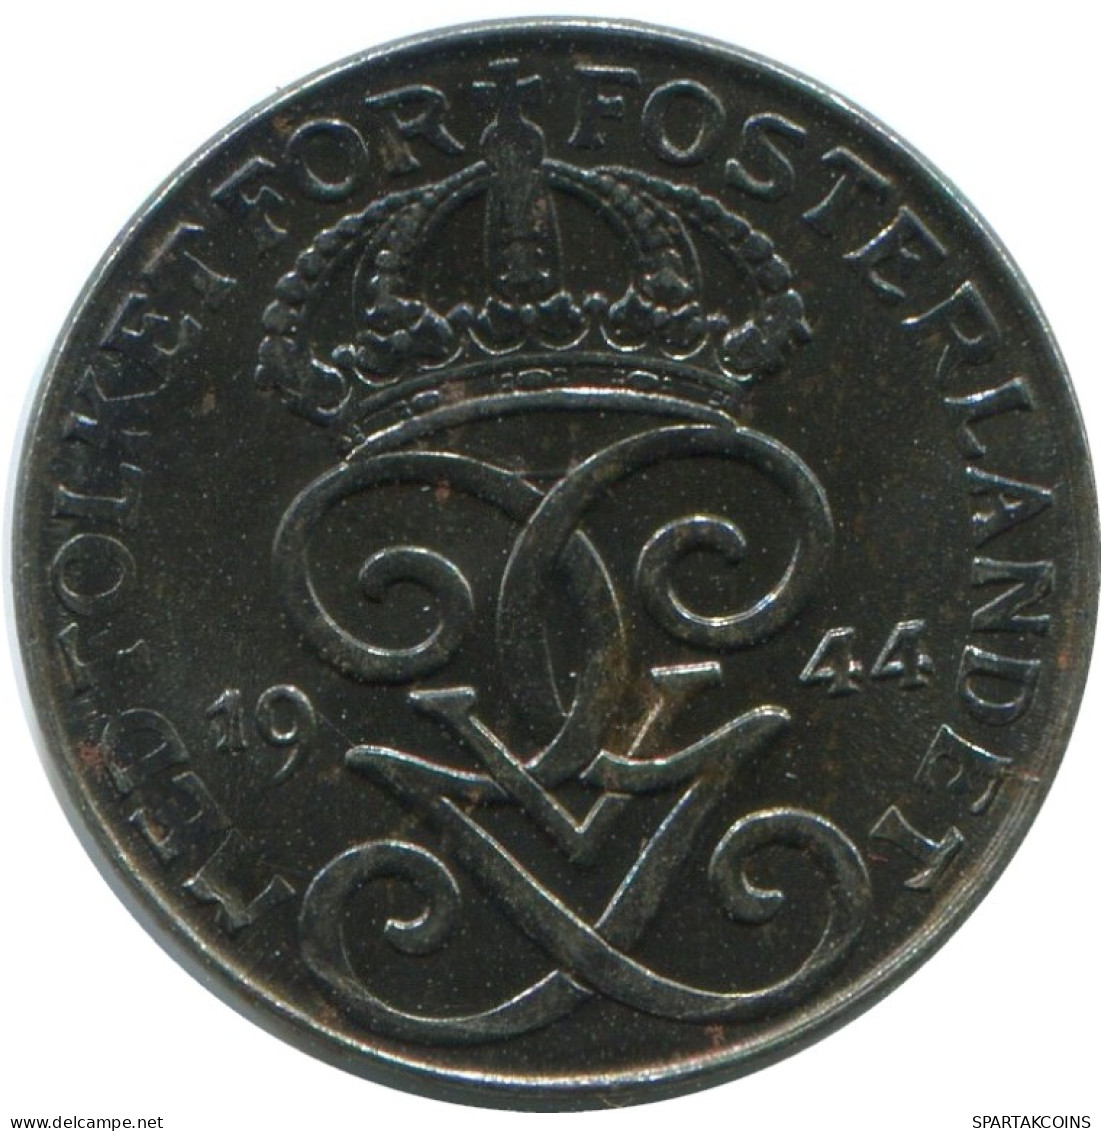 1 ORE 1944 SWEDEN Coin #AD357.2.U.A - Sweden